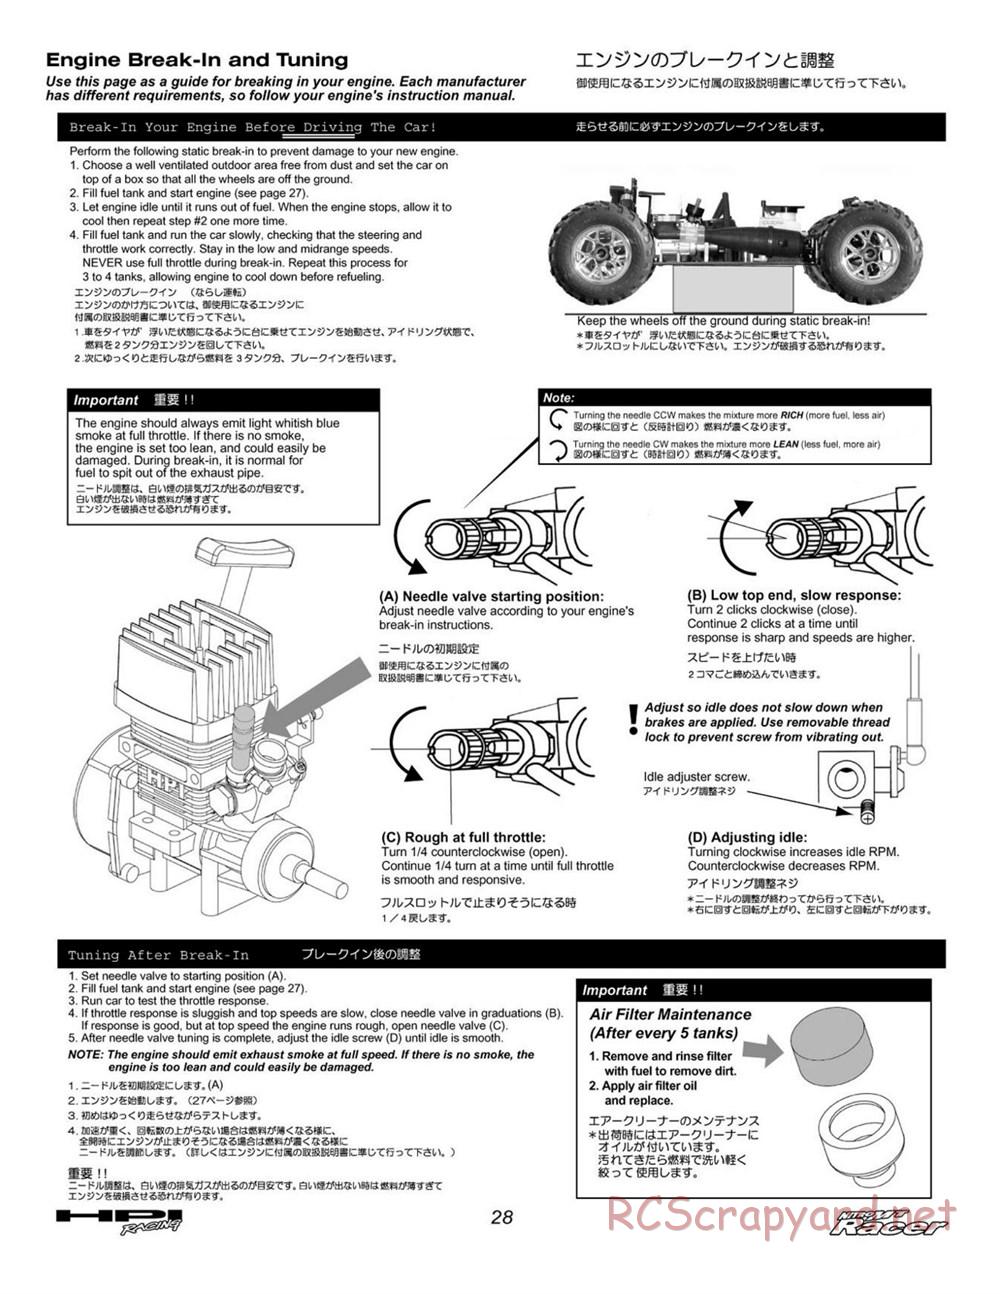 HPI - Nitro MT Racer - Manual - Page 28